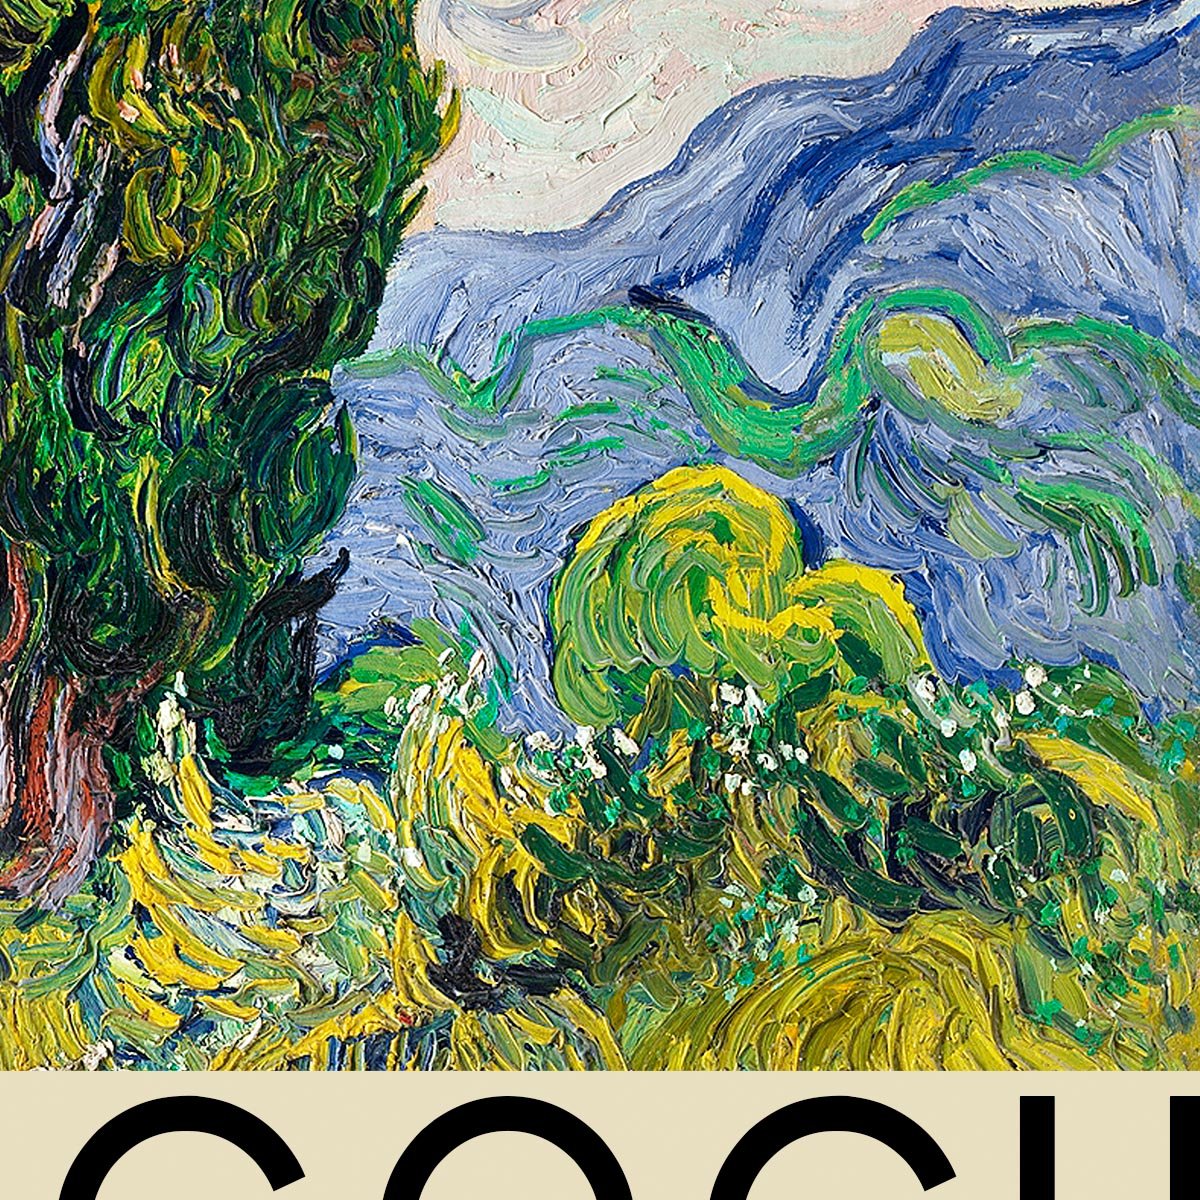 Cypresses Art Poster by Van Gogh